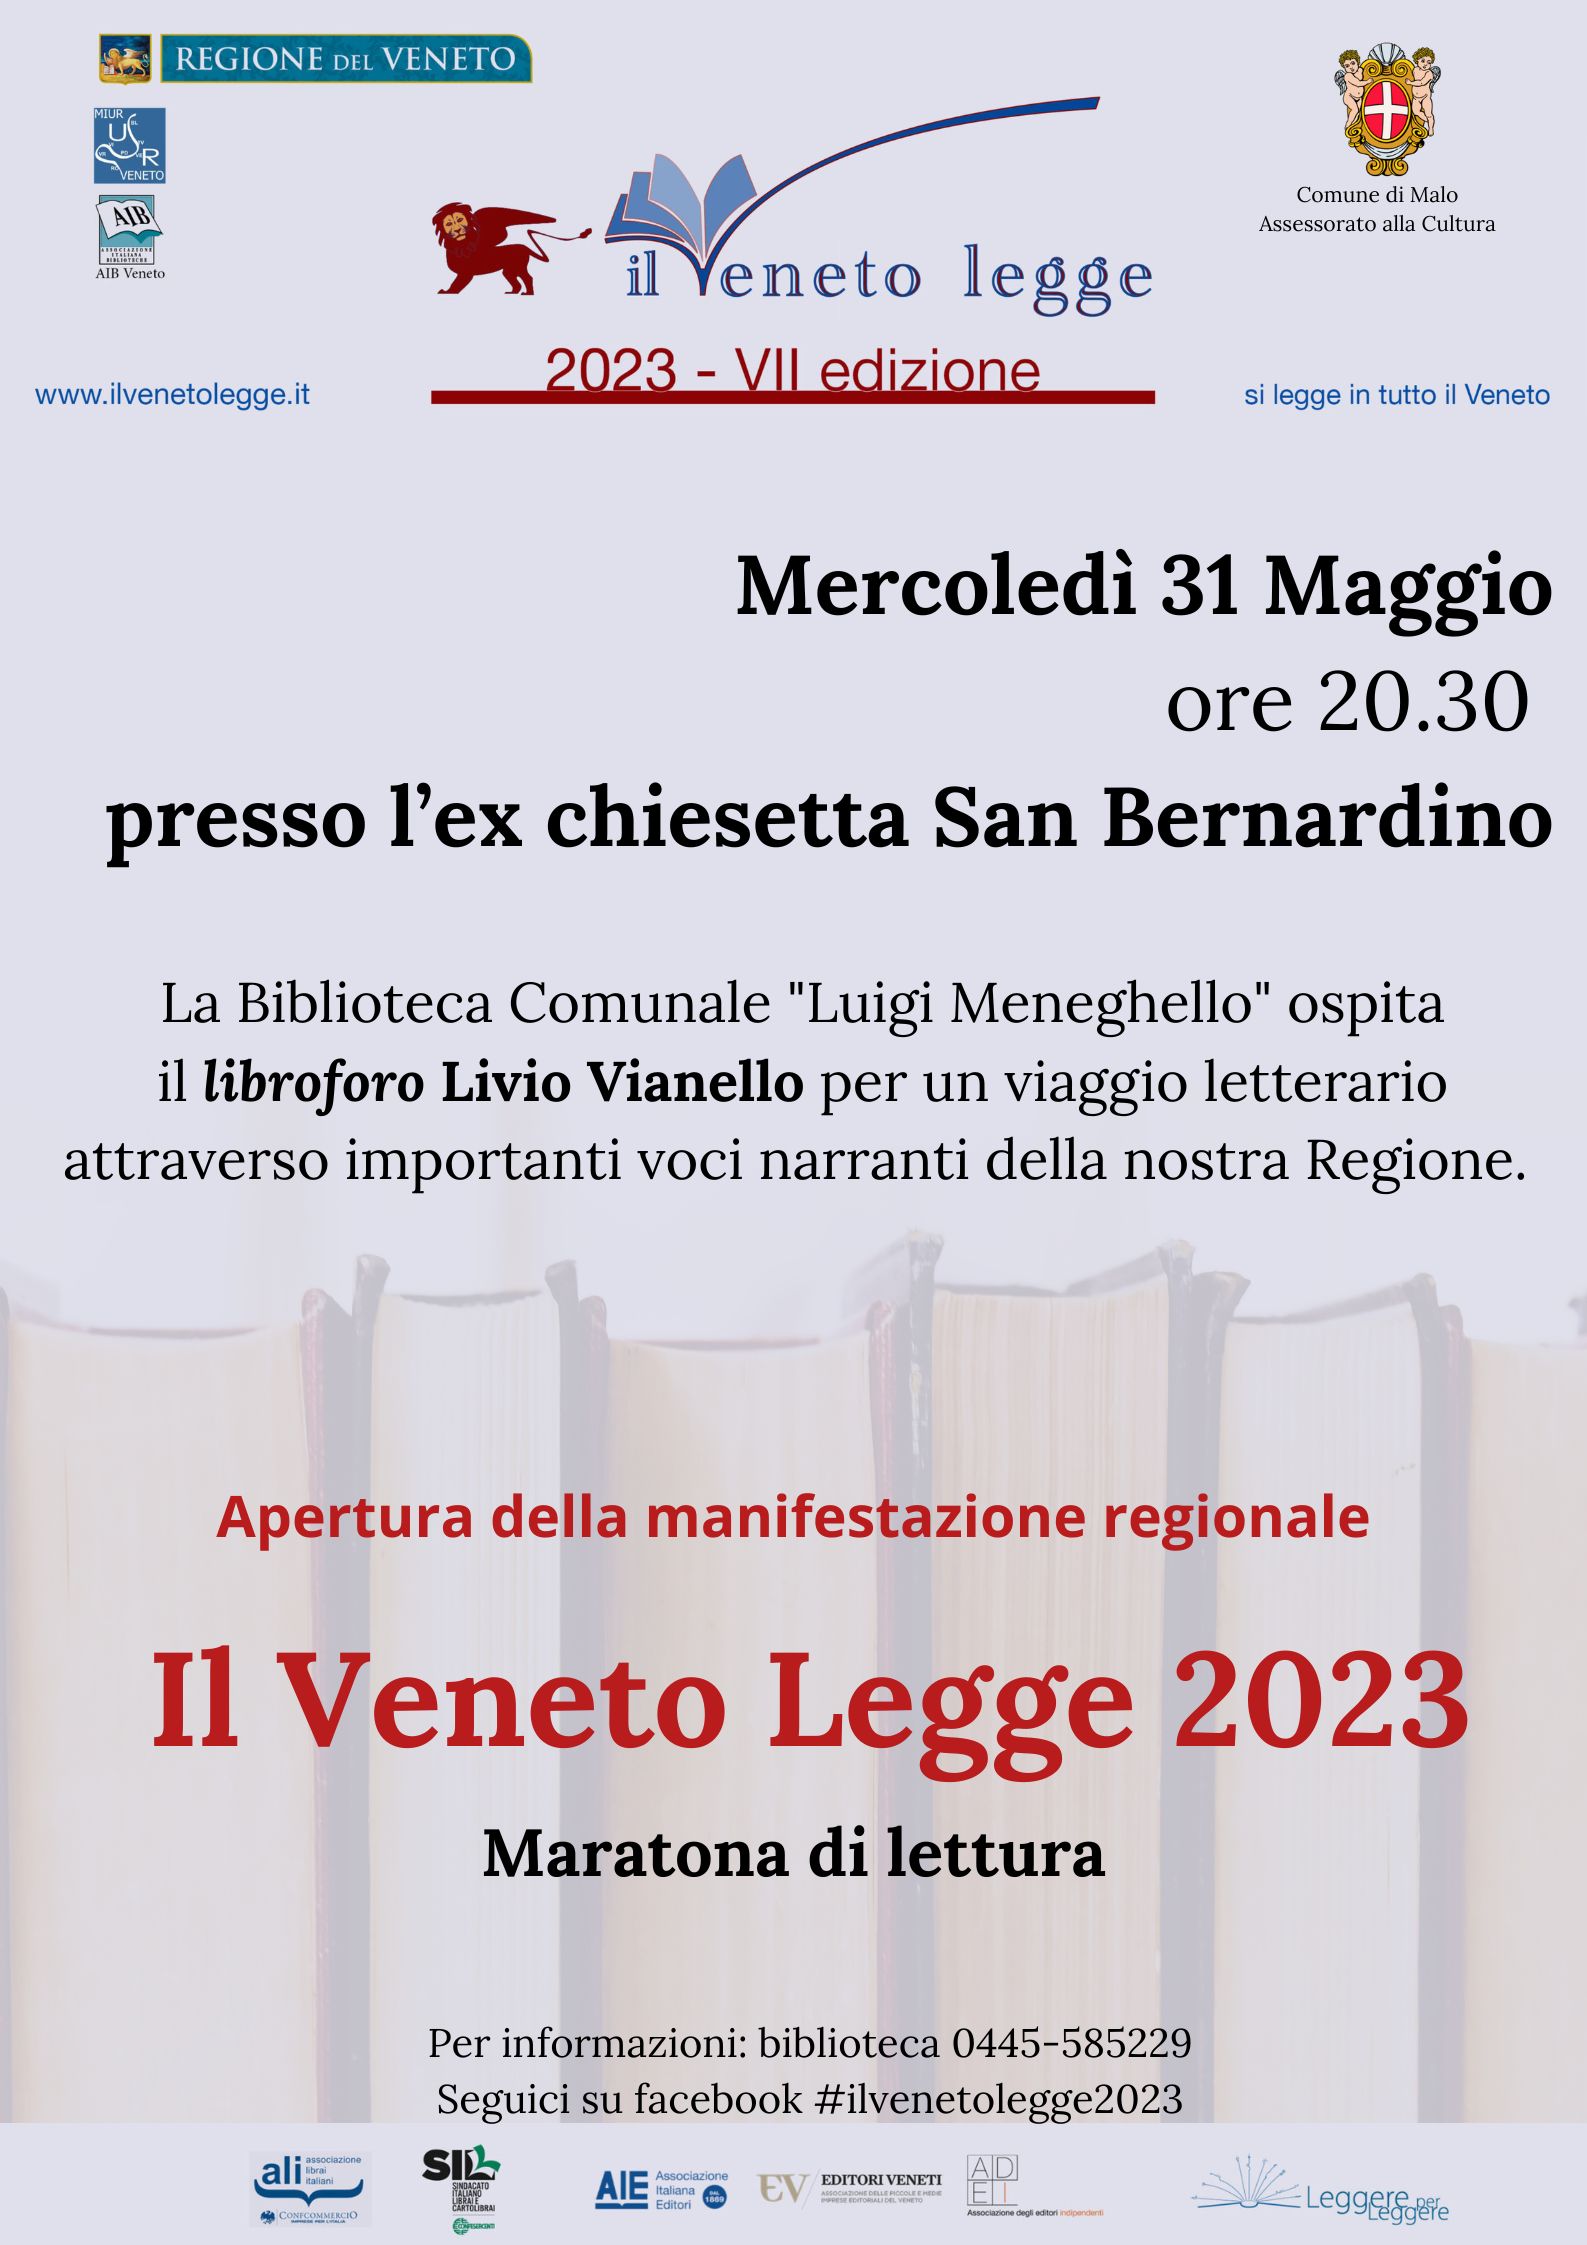 Il Veneto legge 2023